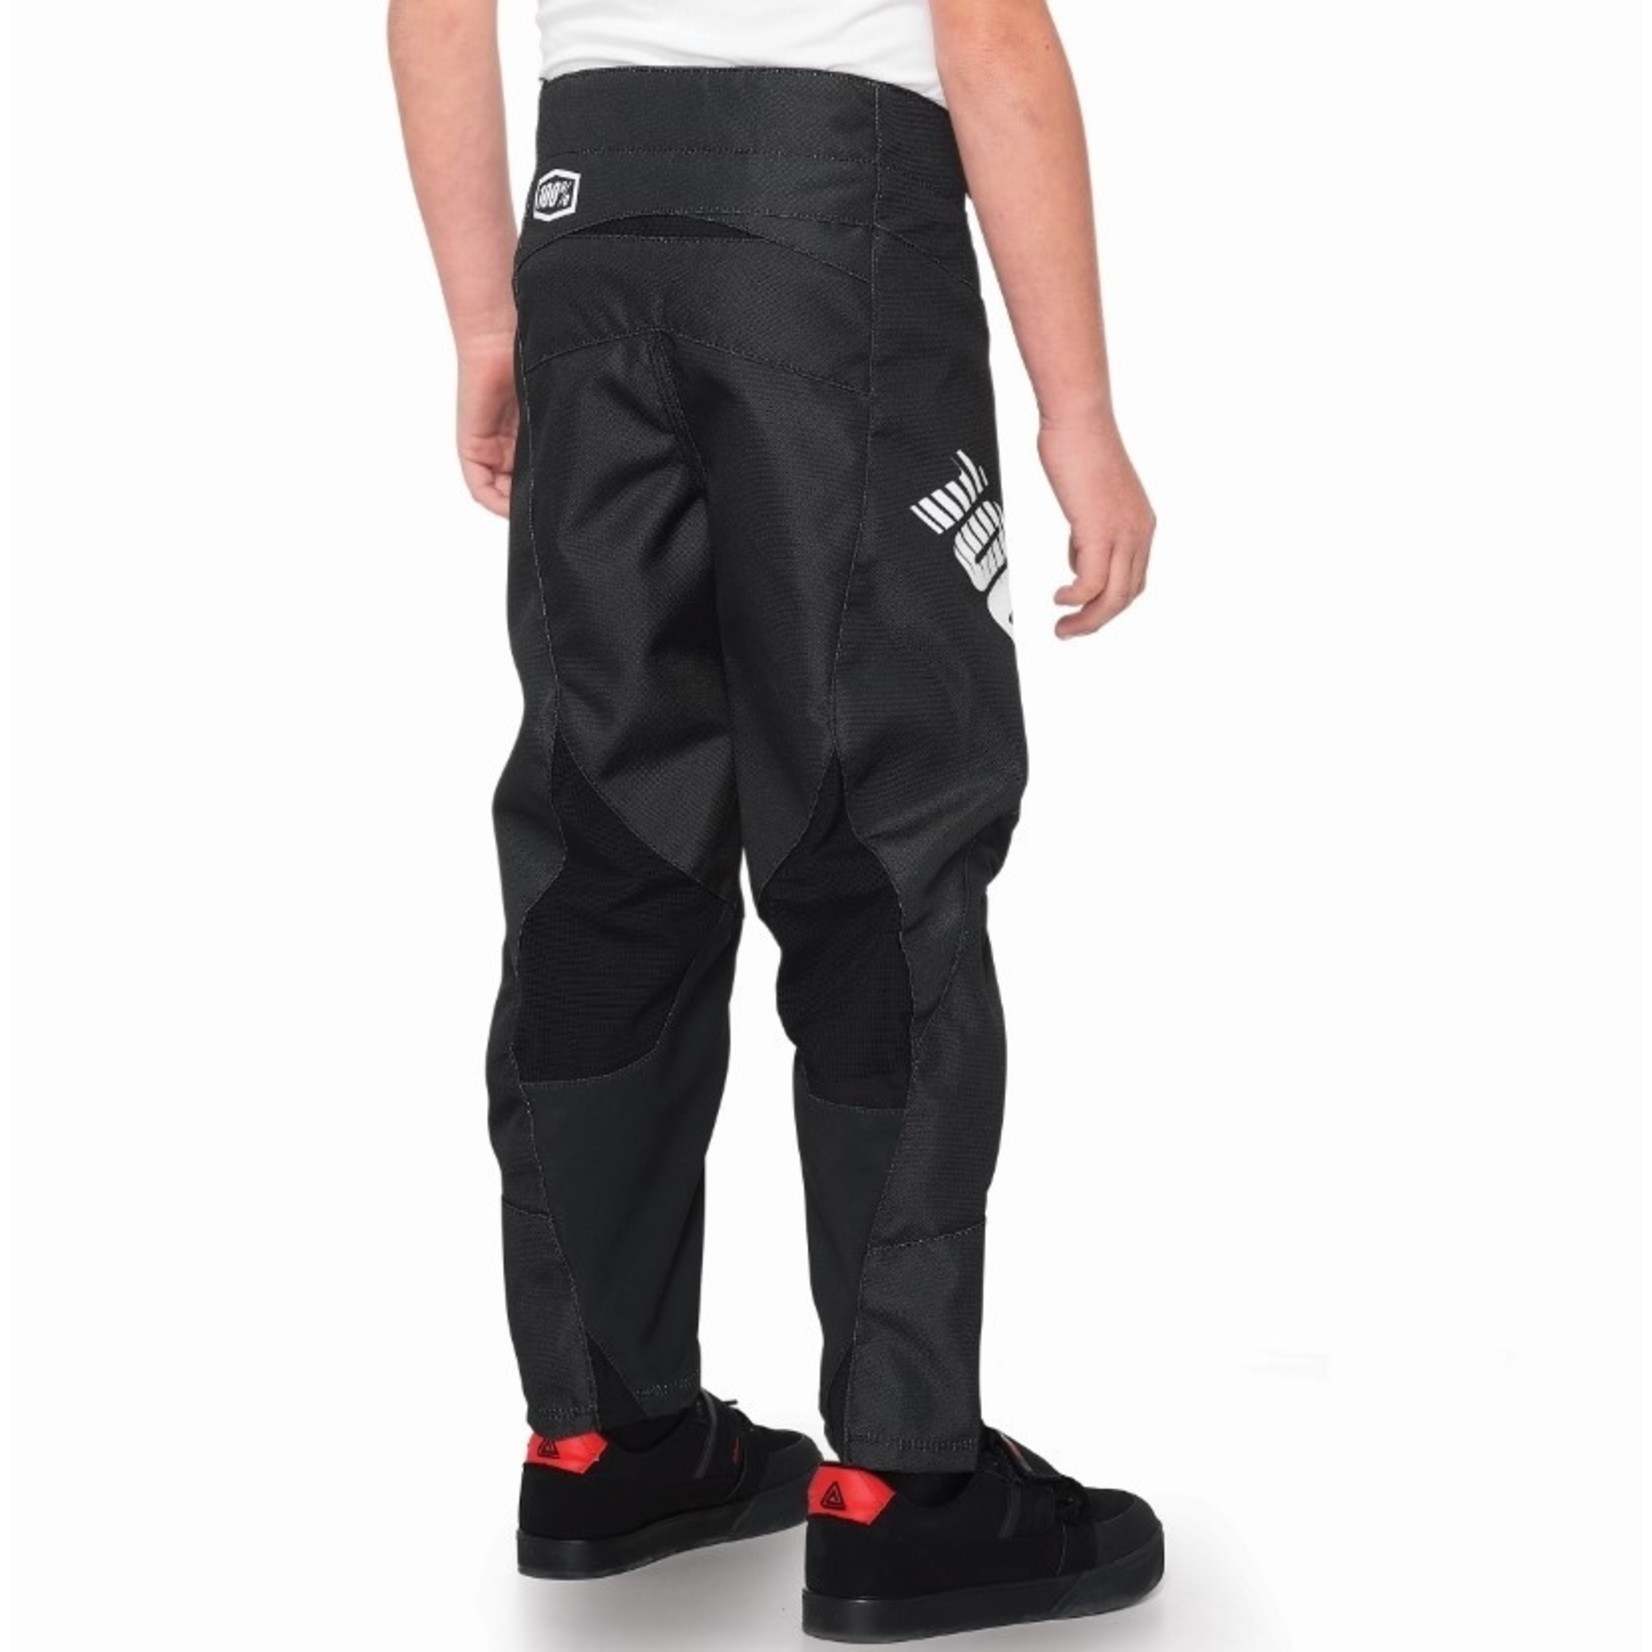 100% R-Core Bike Gear Youth Downhill Pants - Black